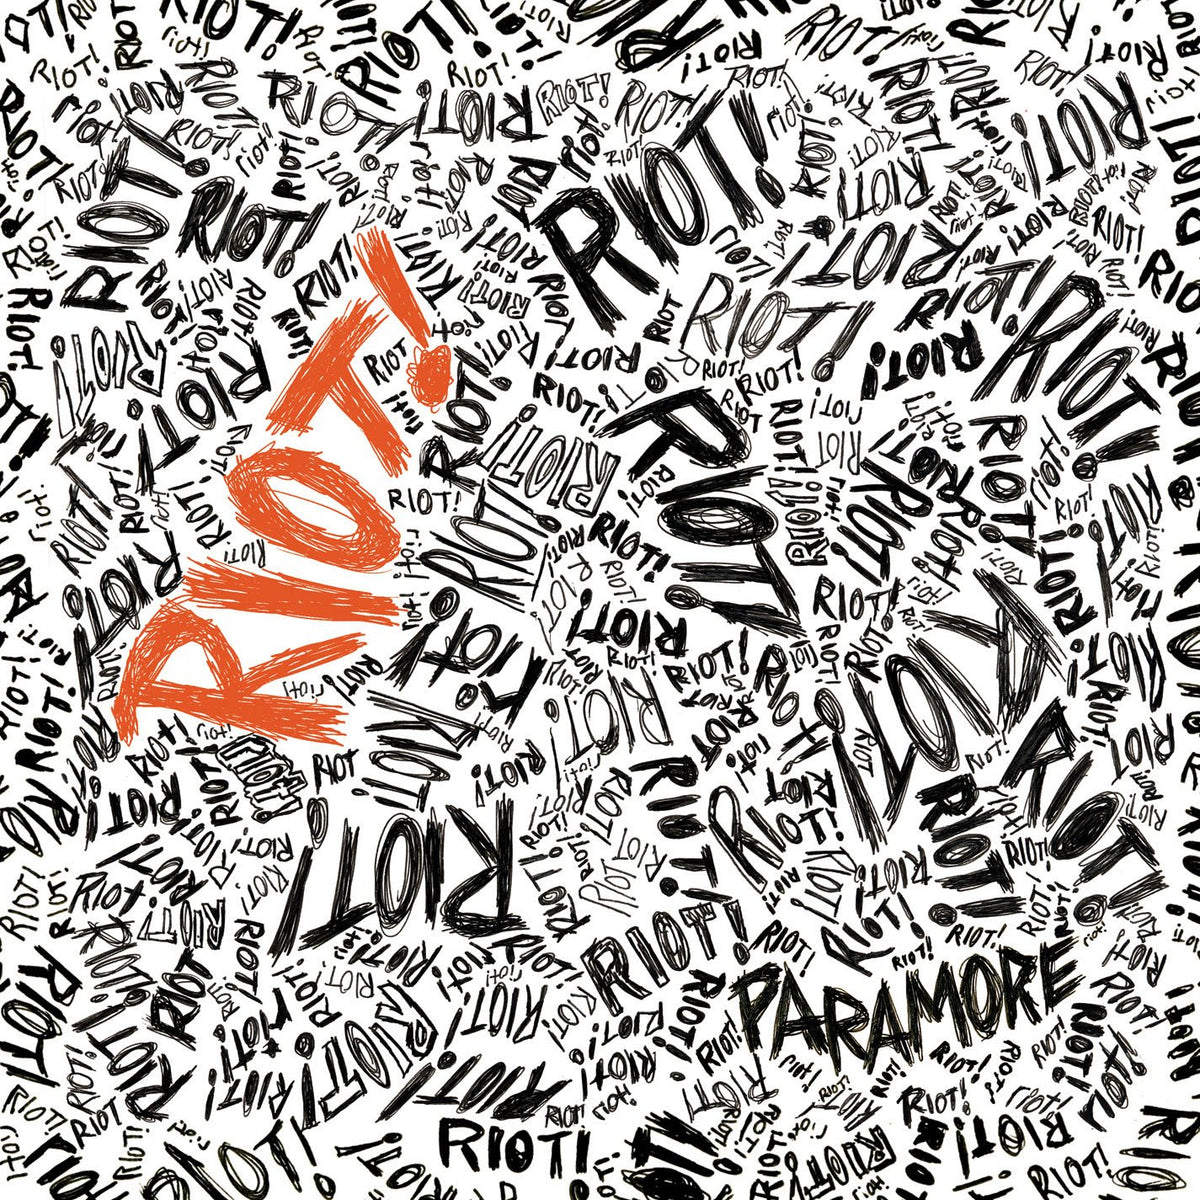 Paramore - Riot! LP (Silver Vinyl, 25th Anniversary Edition)